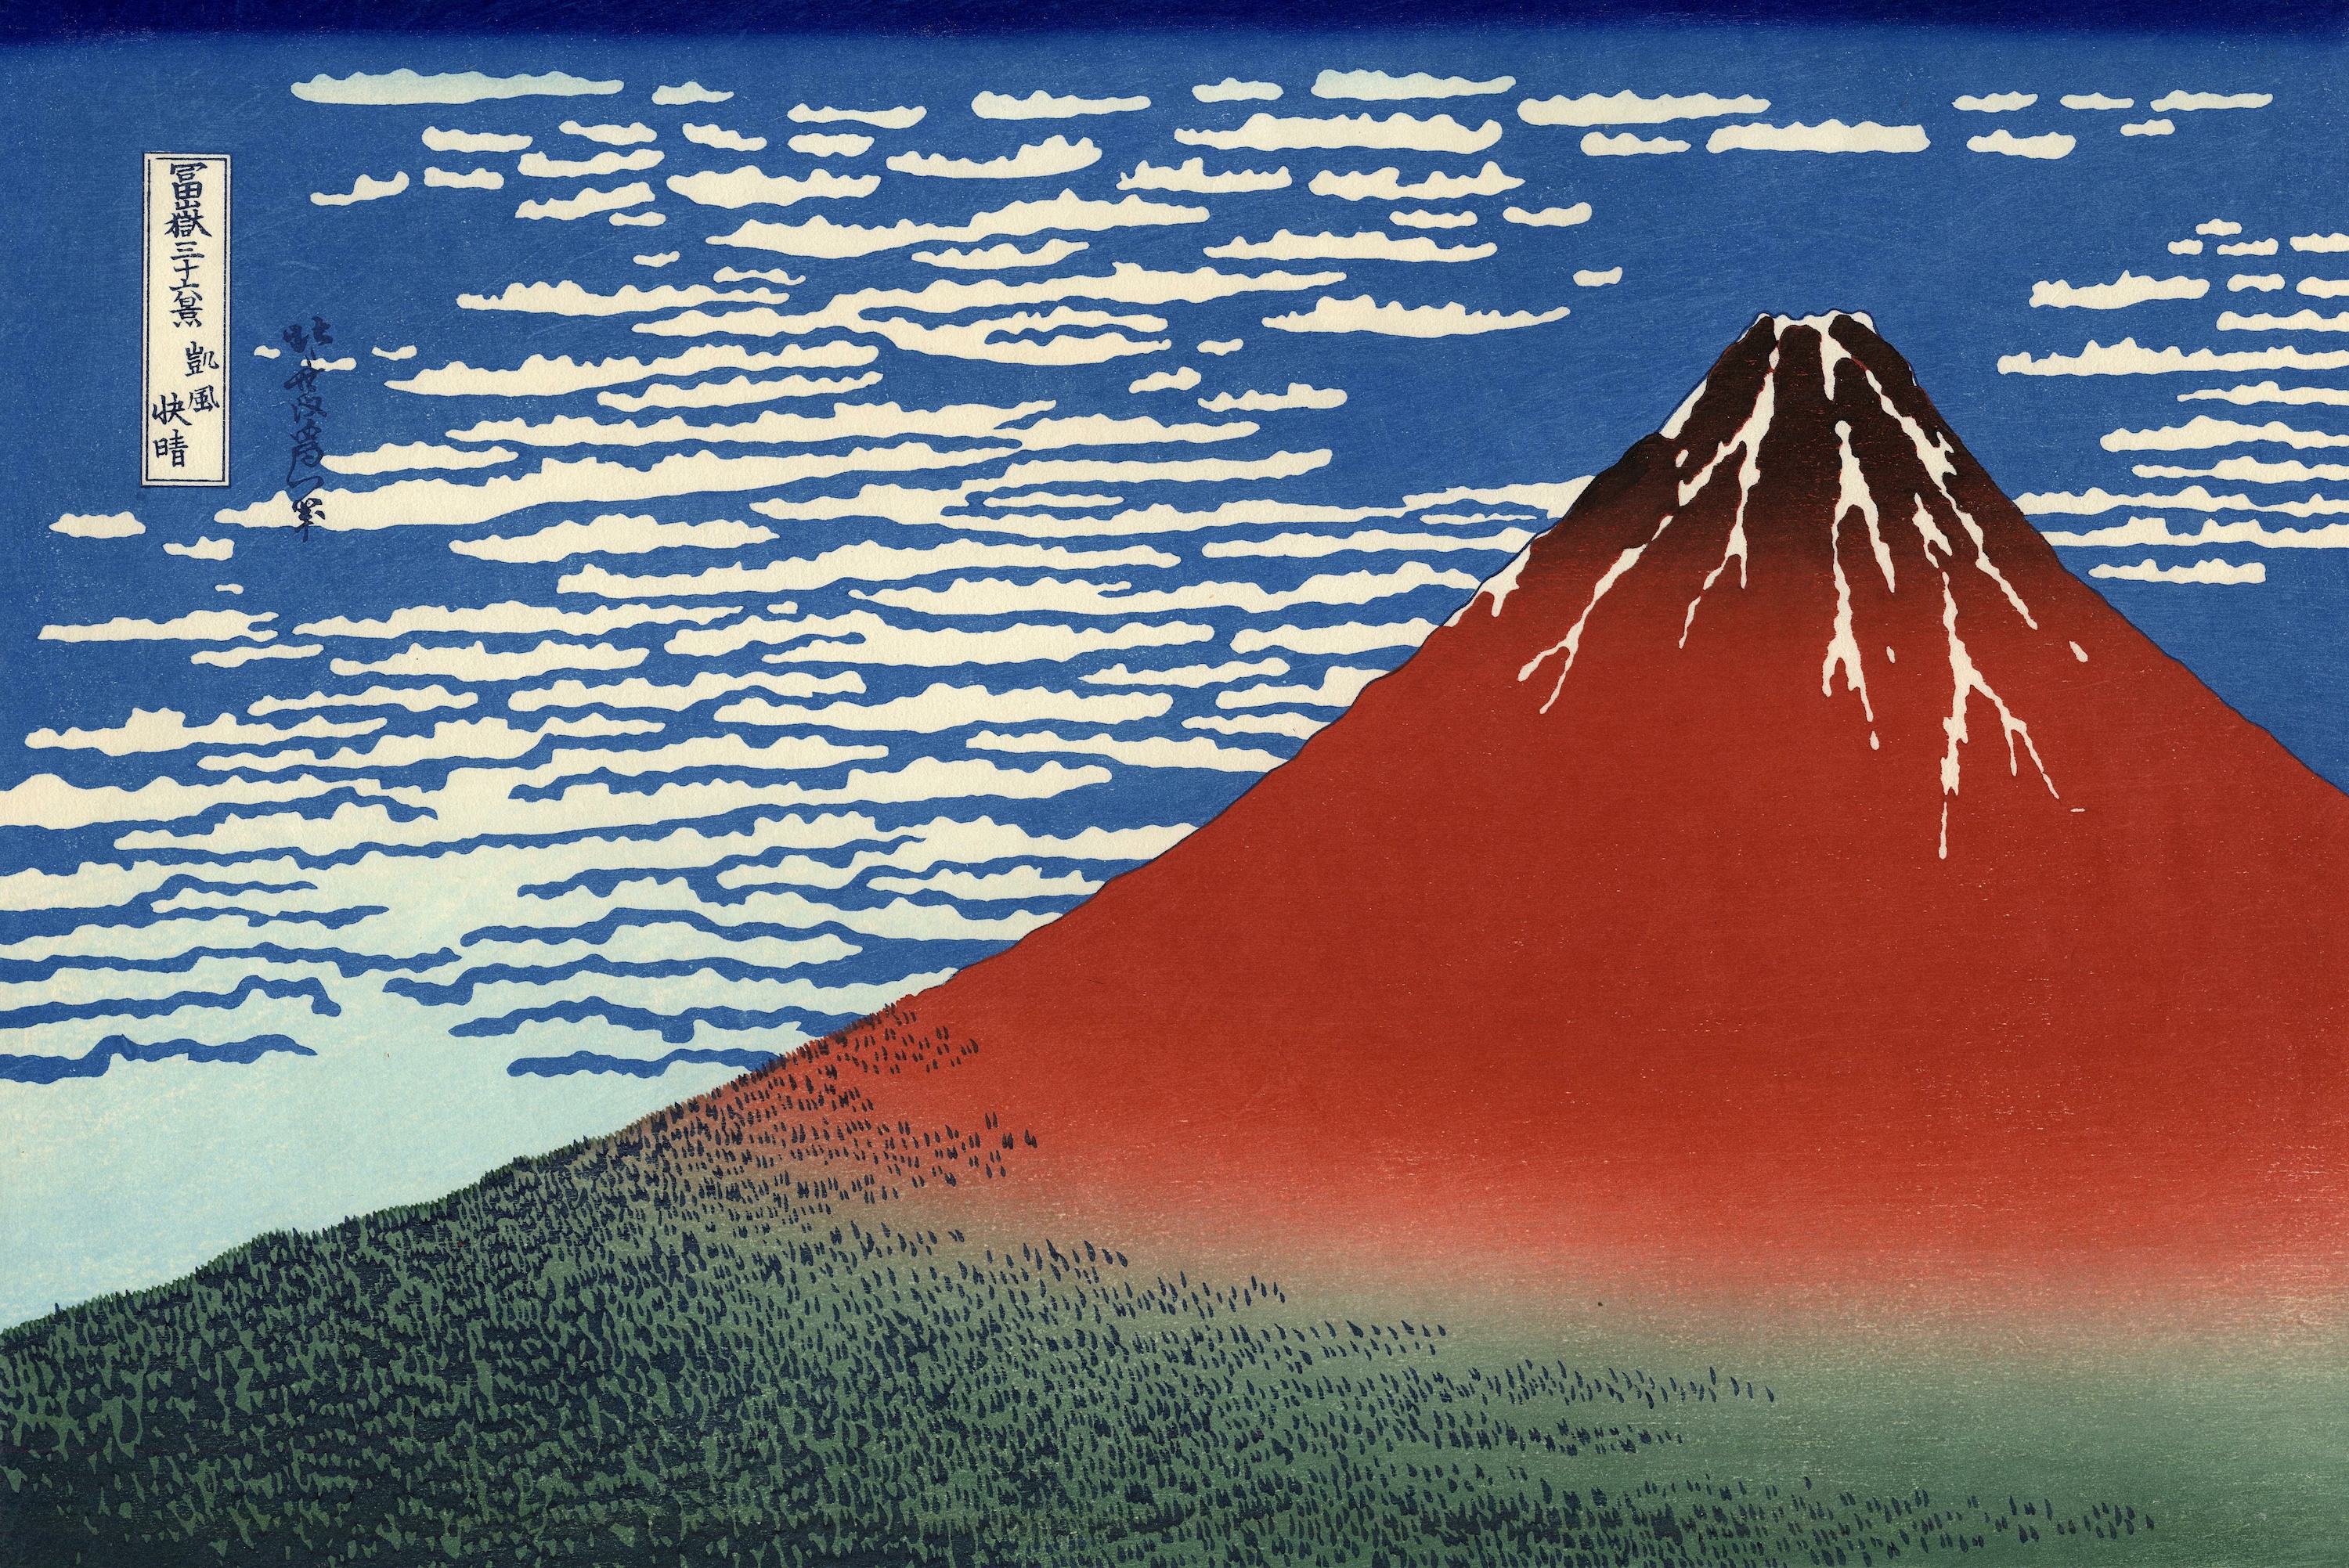 Viento del sur, Cielo claro by Katsushika Hokusai - c. 1830 - 26.72 x 38 cm British Museum